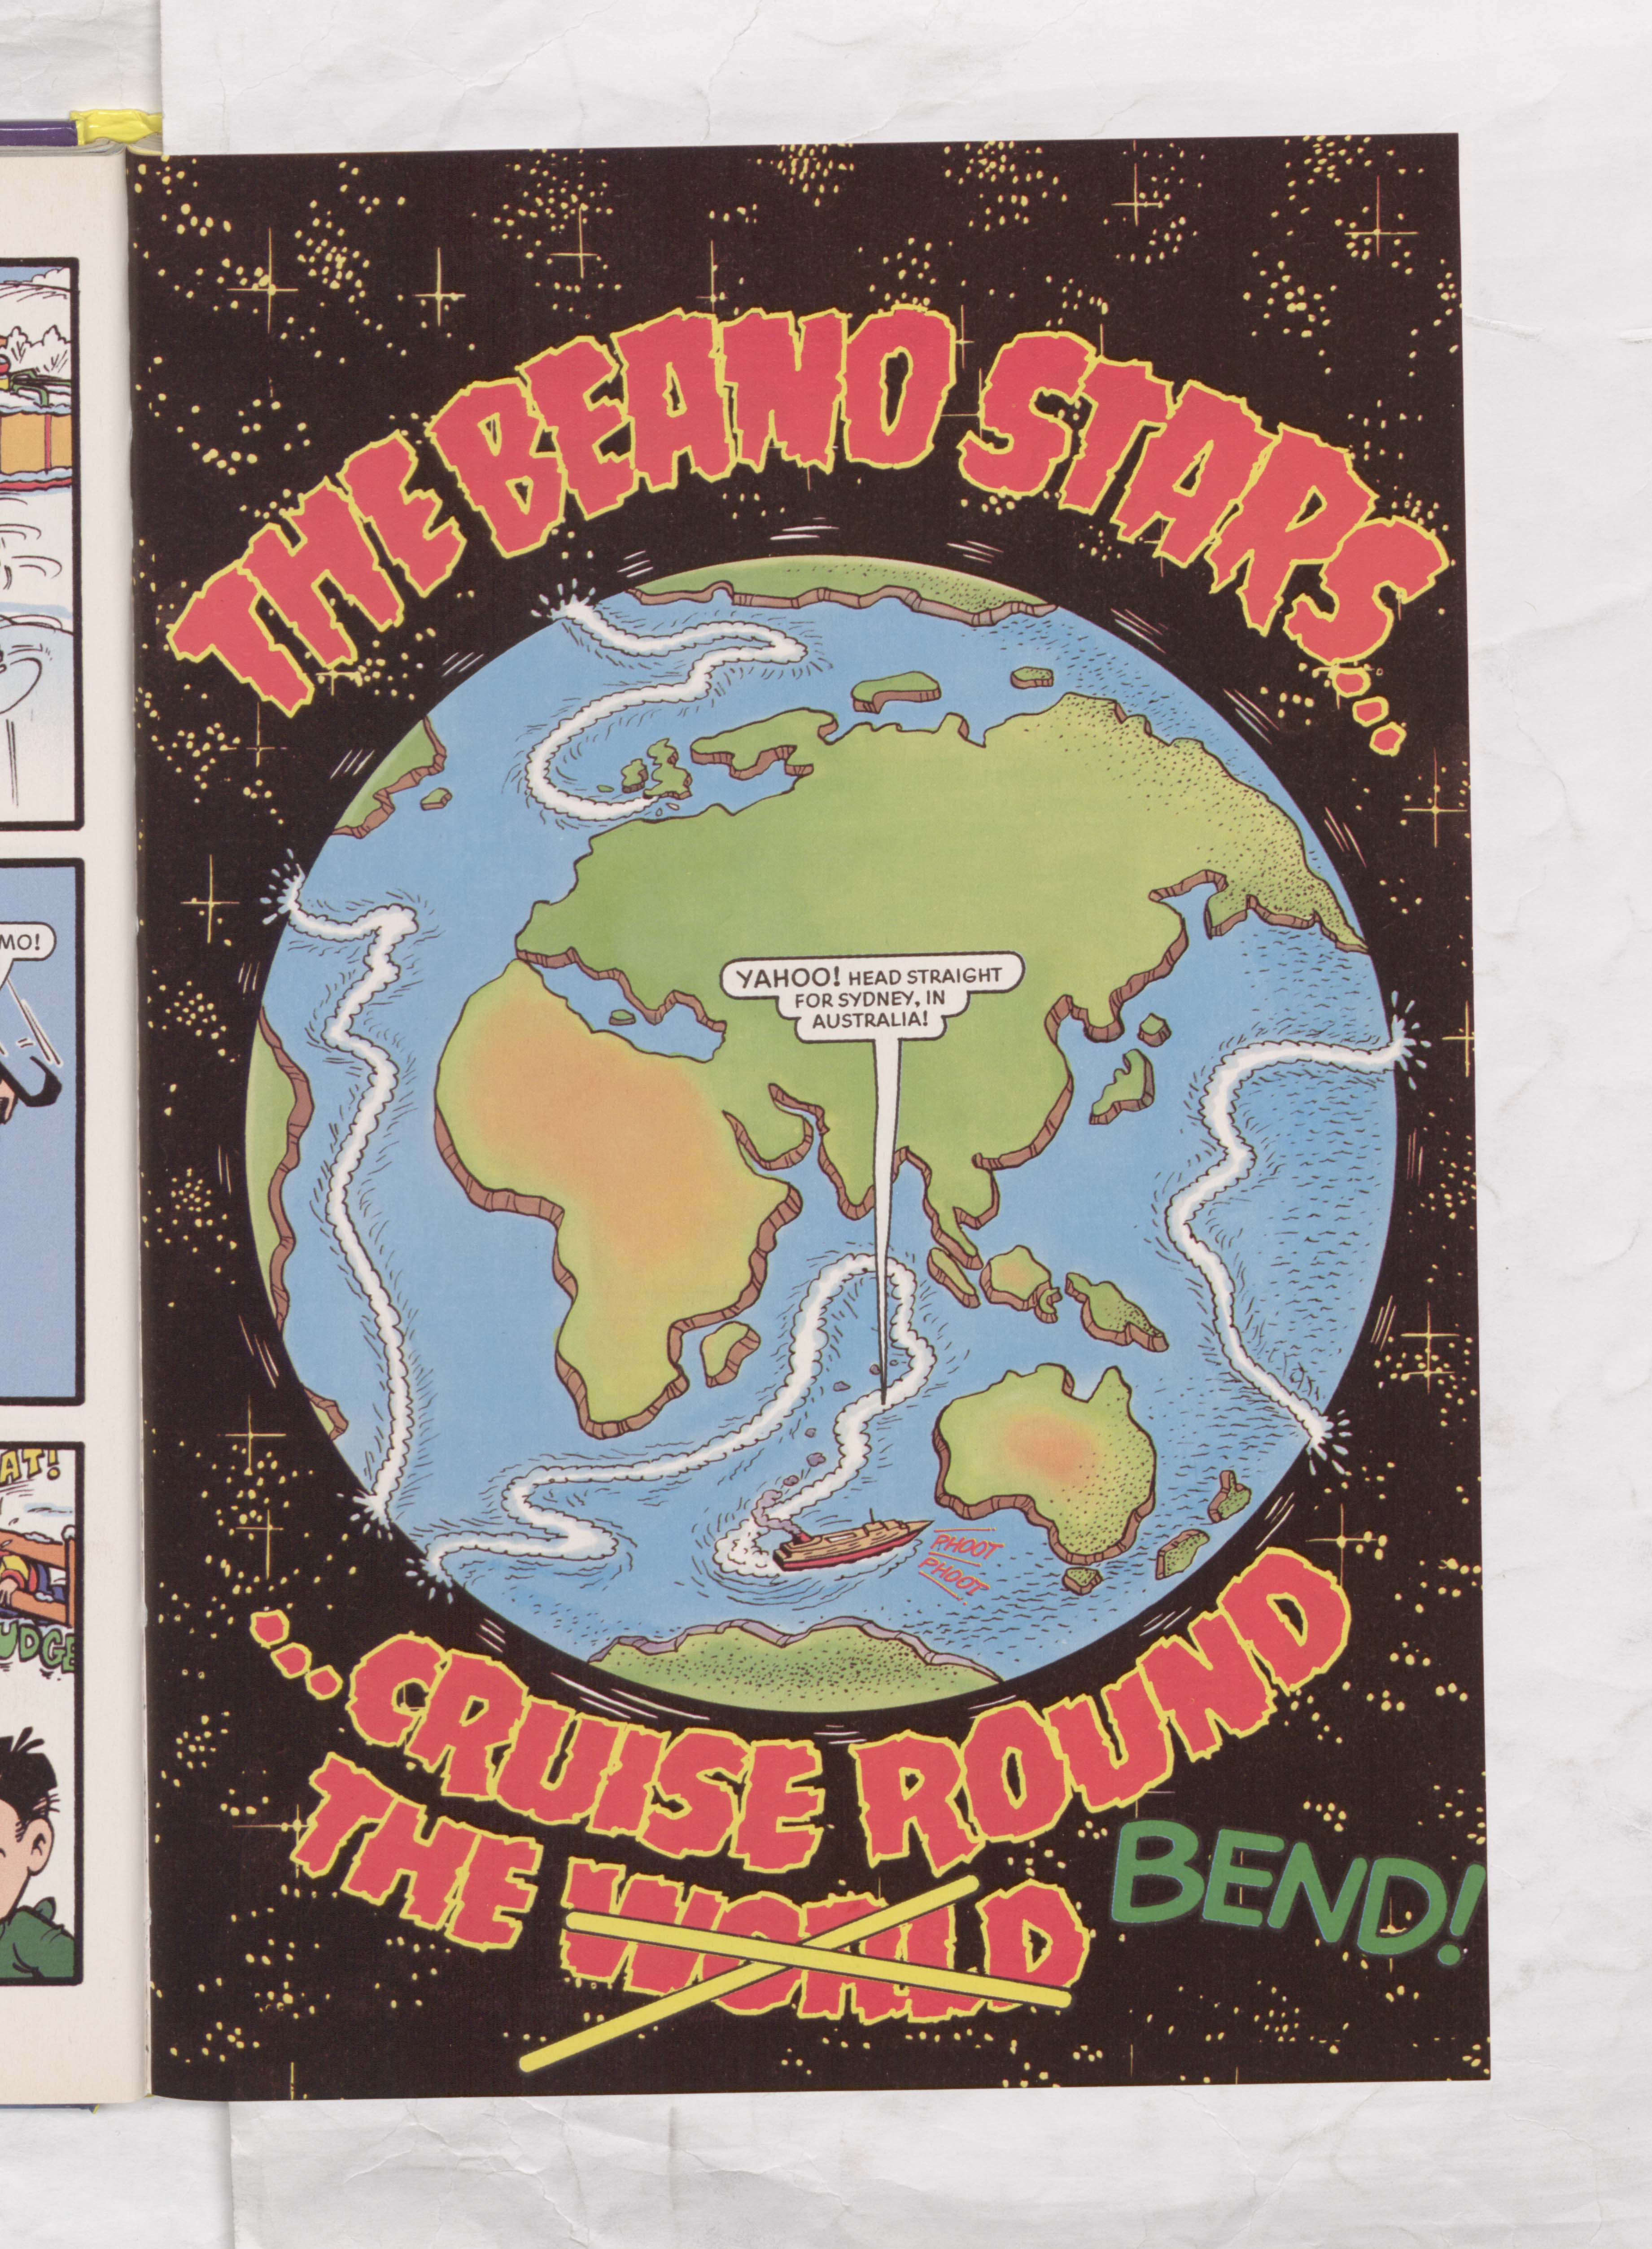 The Beano Stars Cruise Round the World - Beano Book 2000 Annual - Page 1